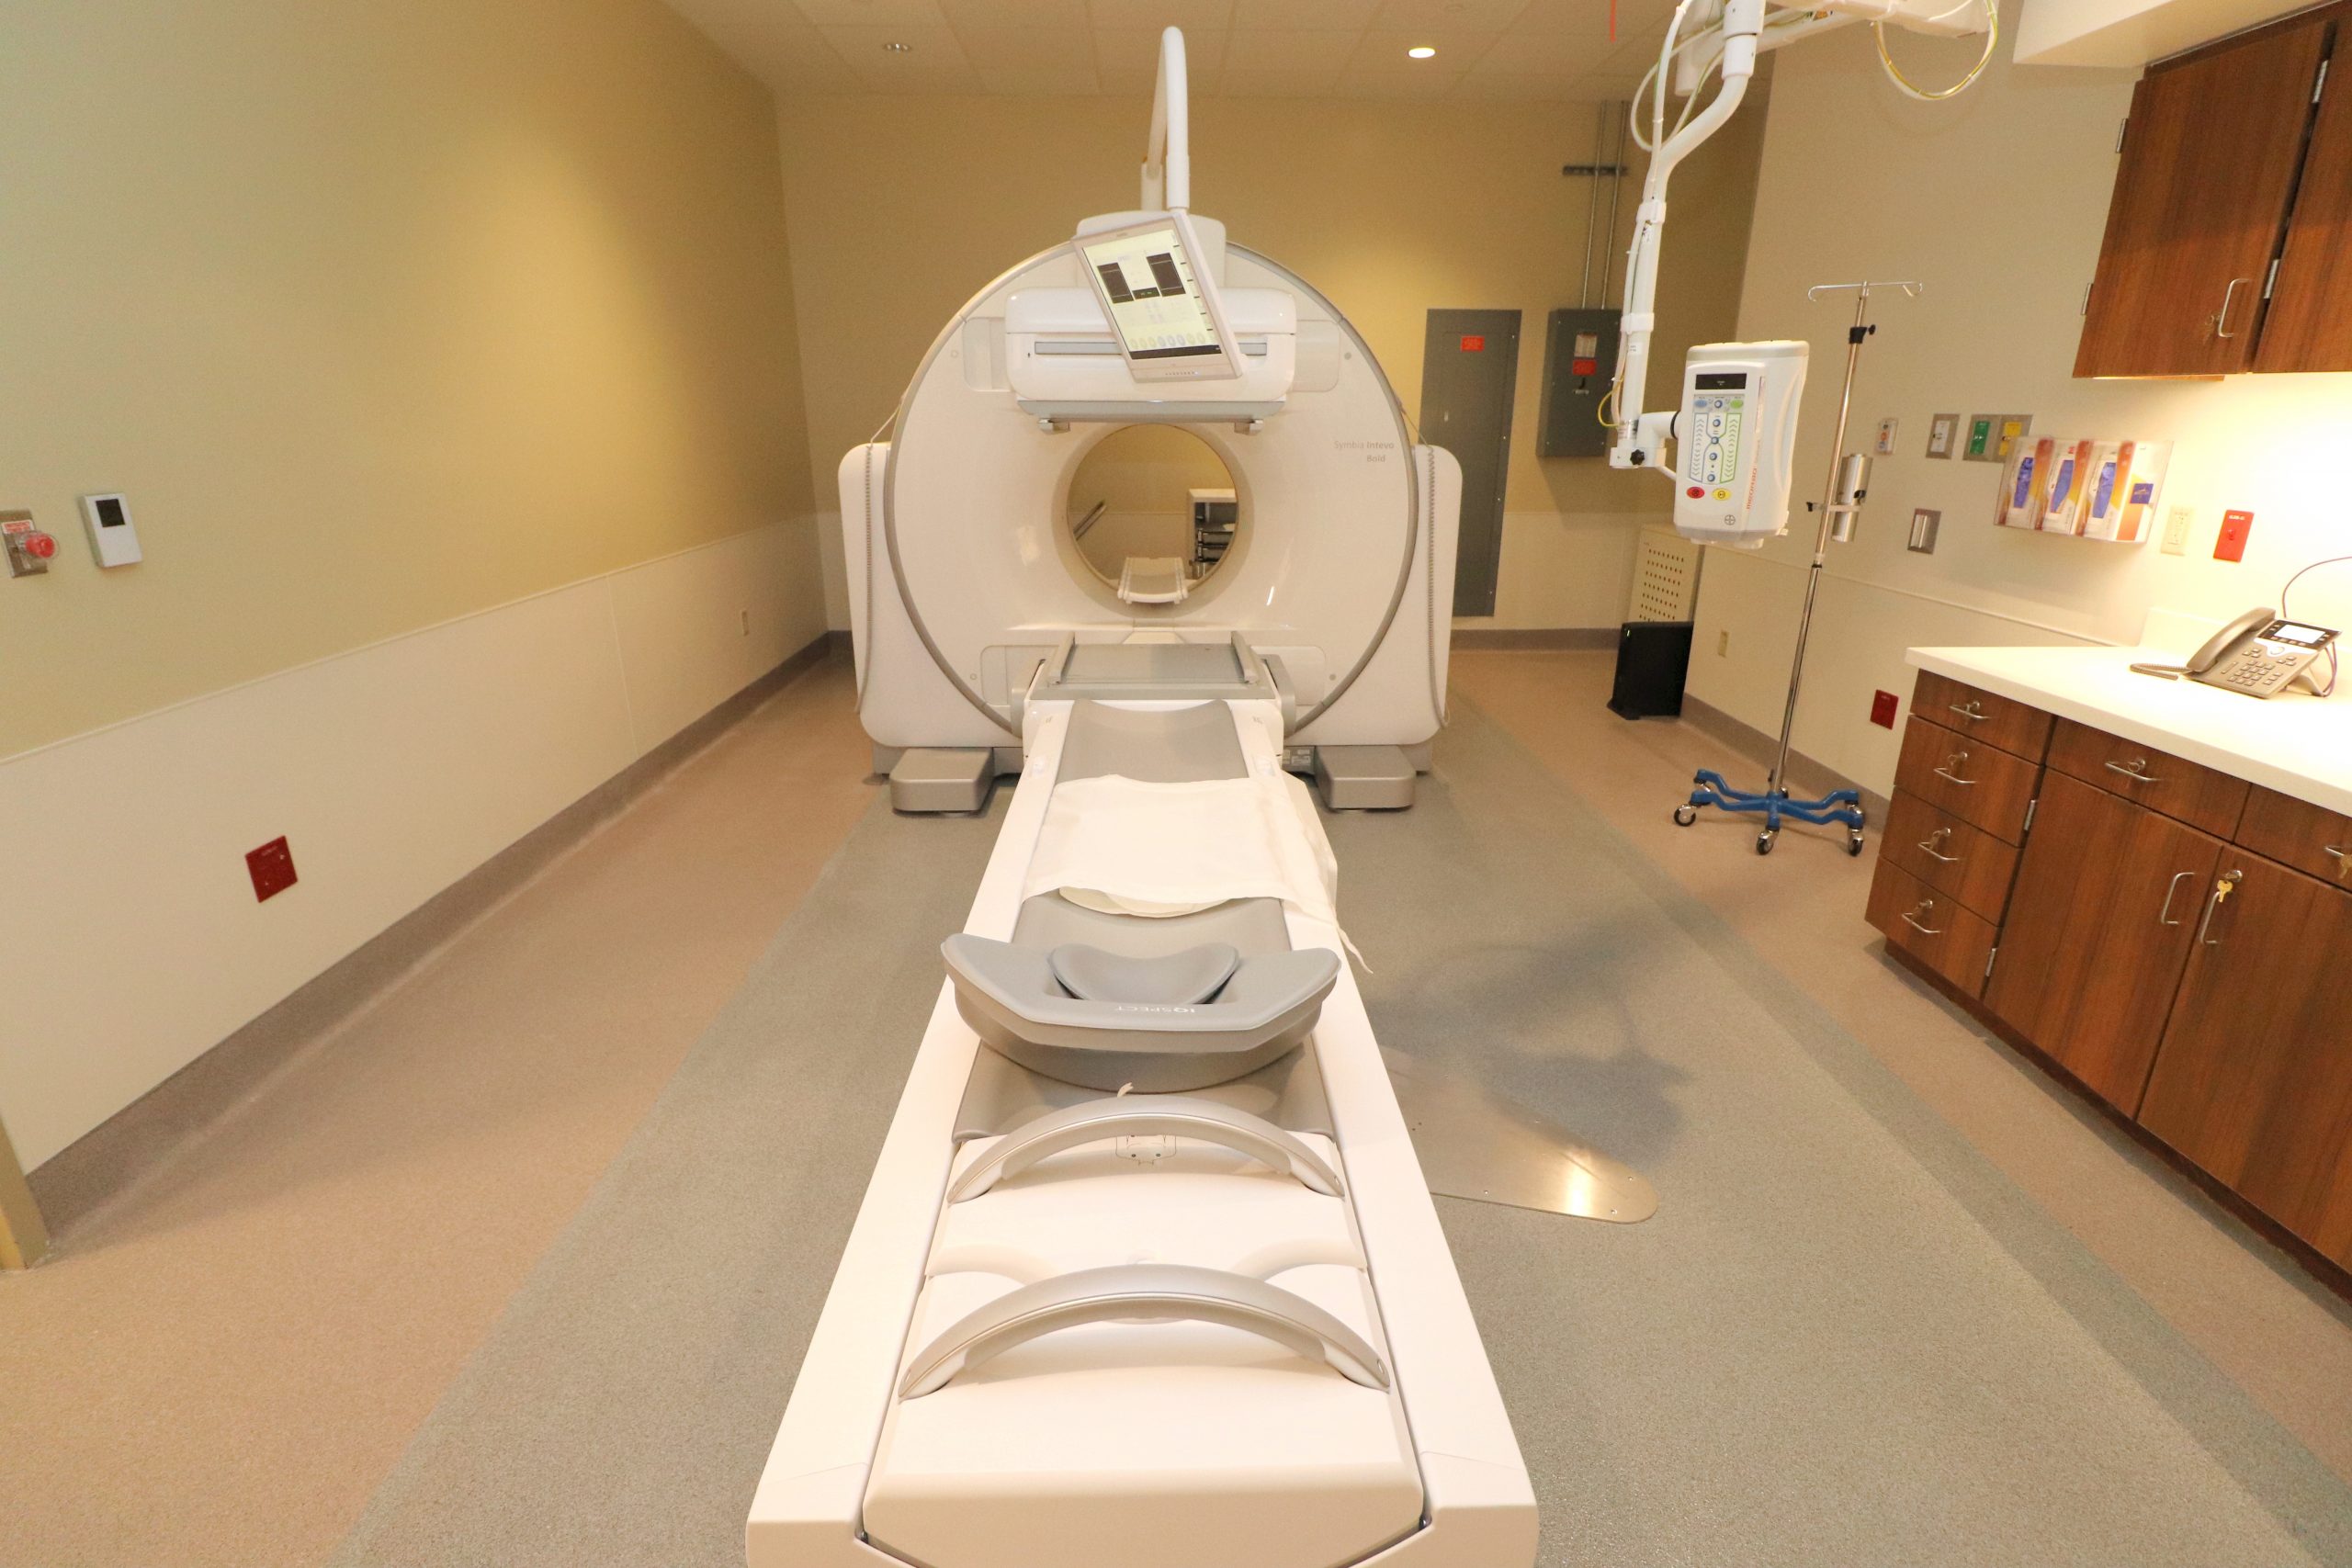 image of a Siemens MRI imaging technology